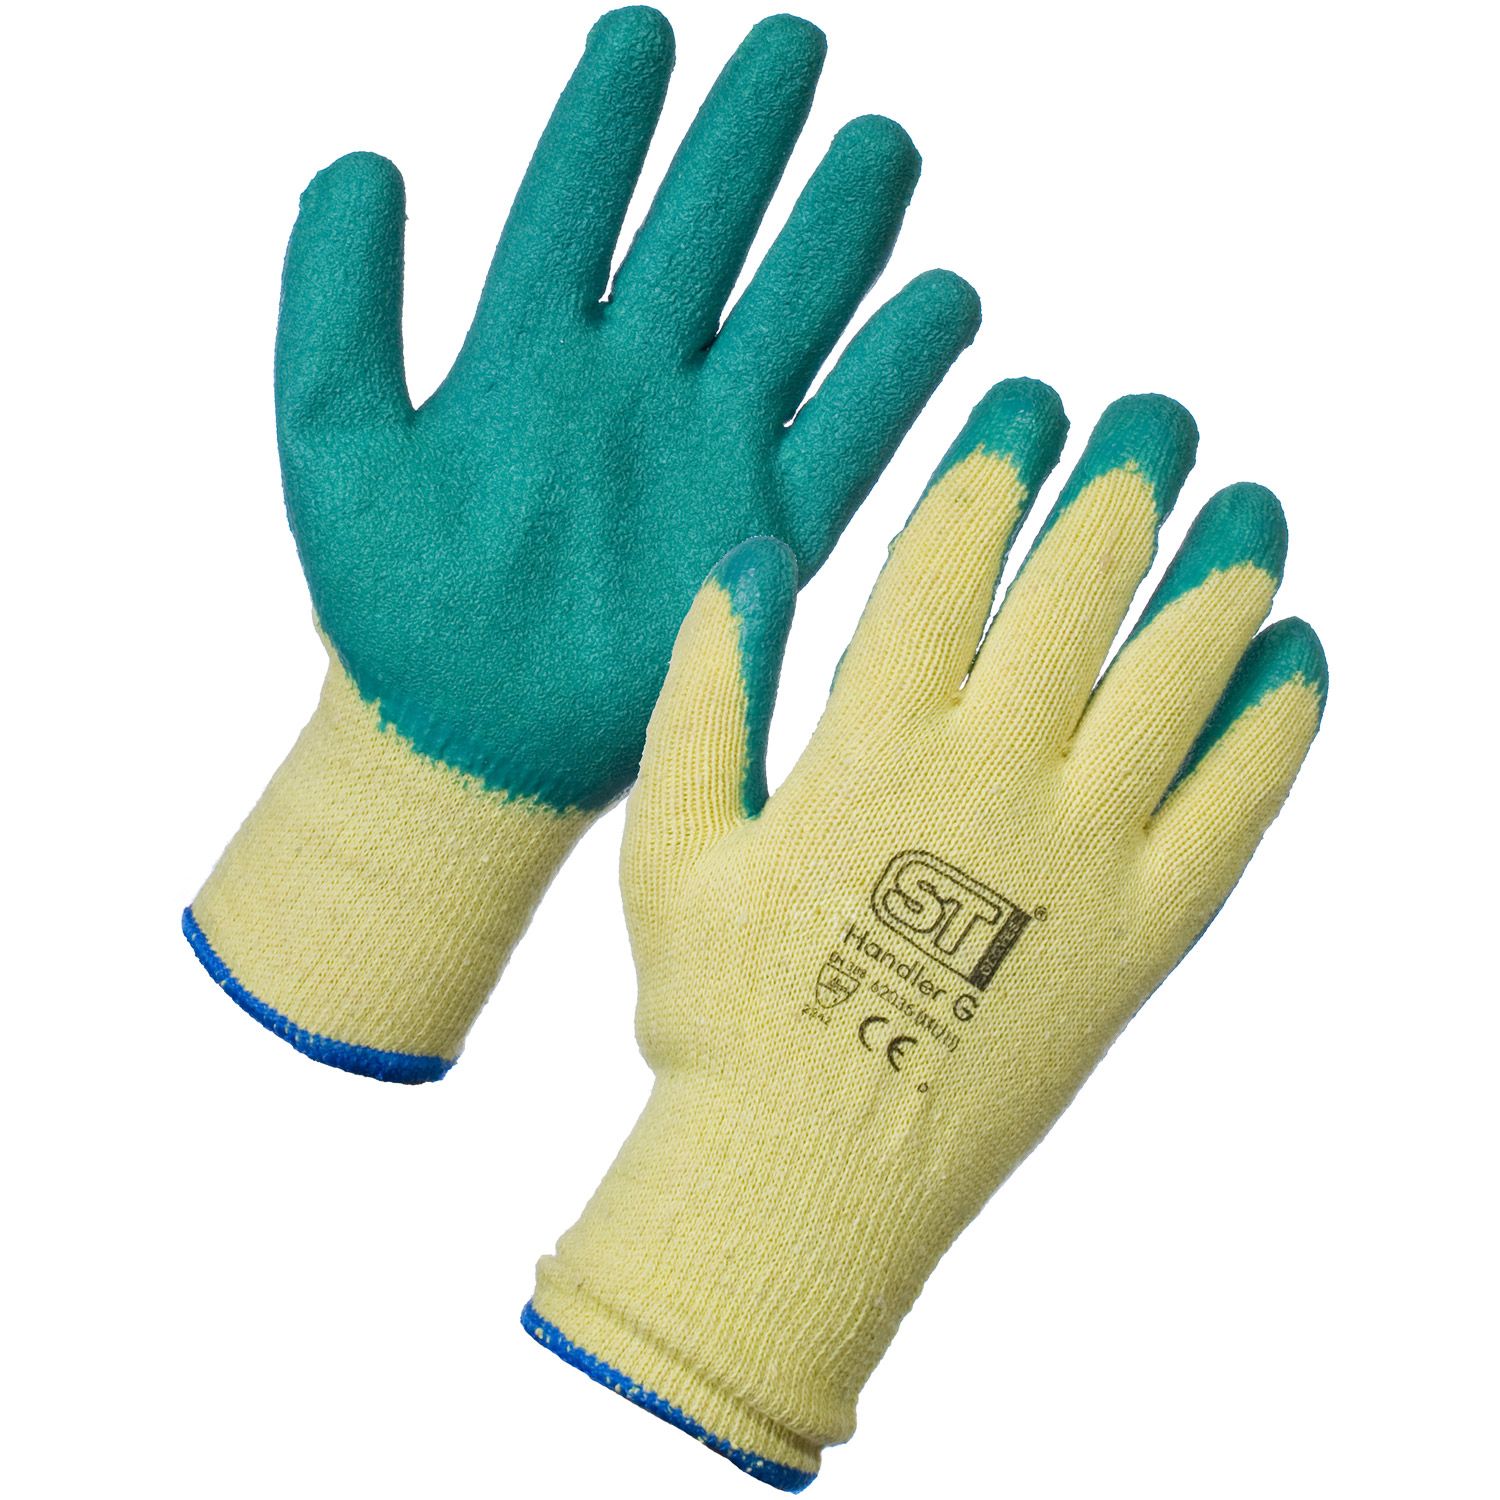 General Handler Gloves - Medium - 12 Pack